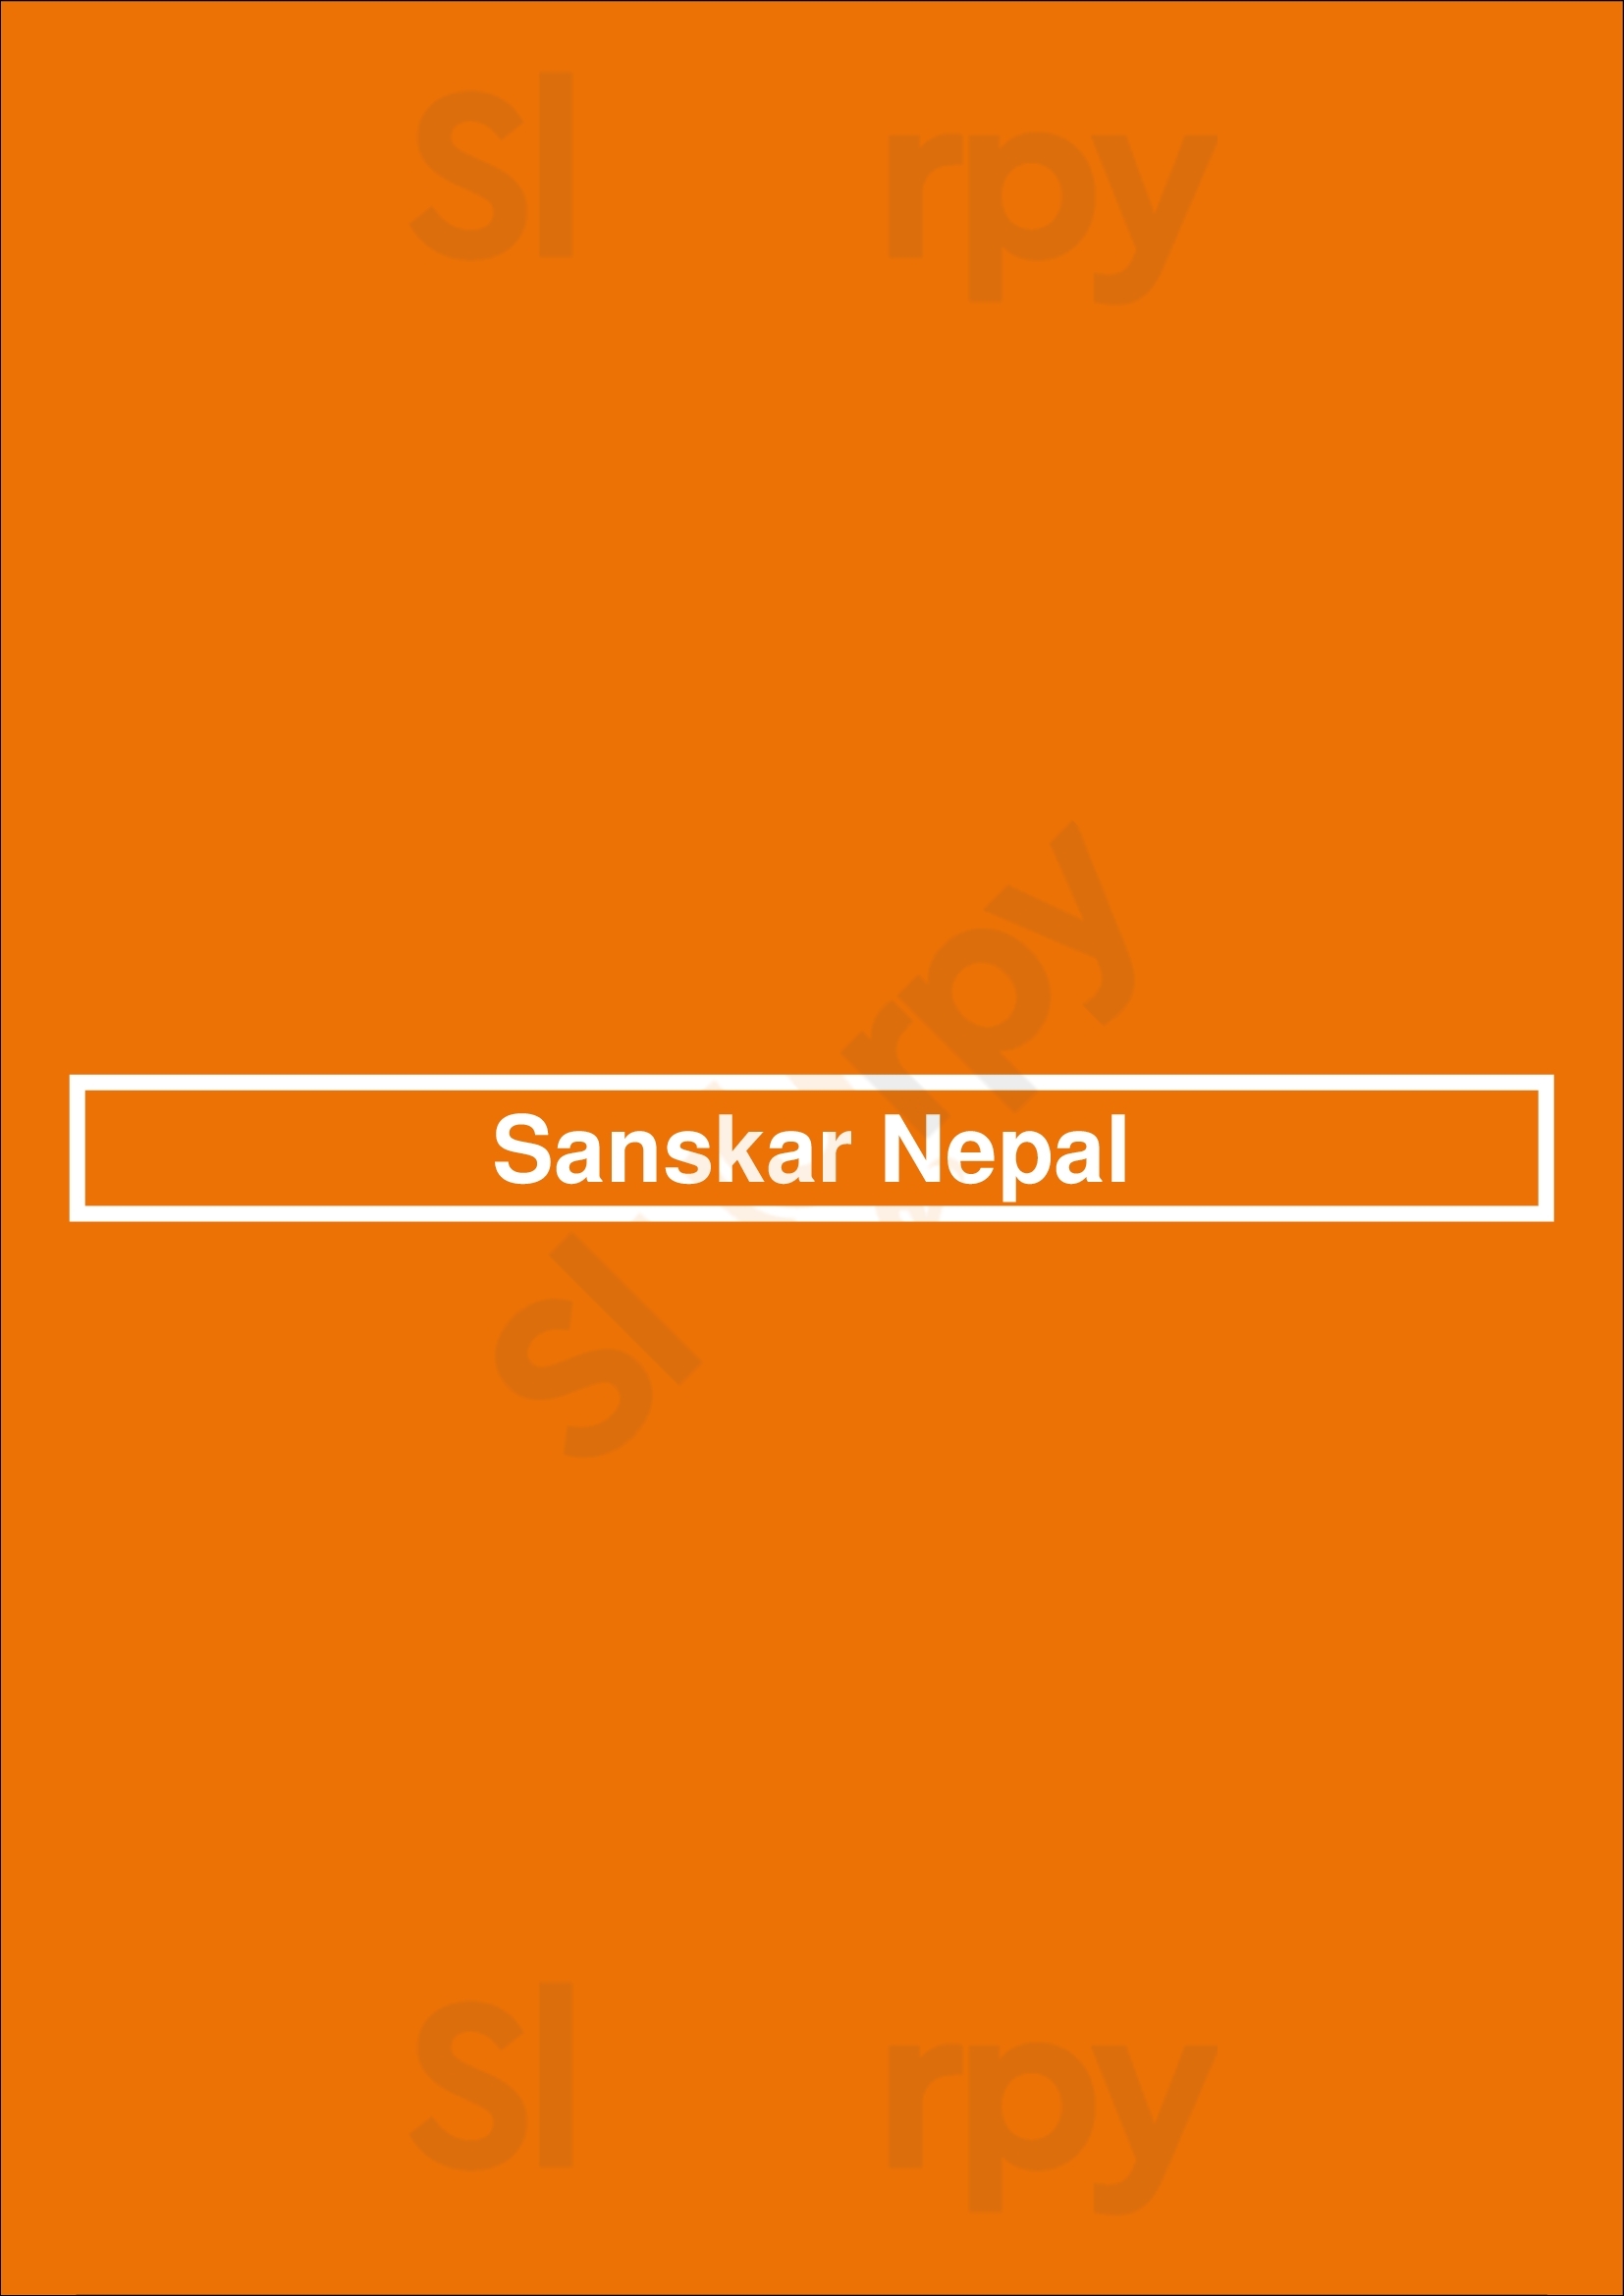 Sanskar Nepal Lisboa Menu - 1